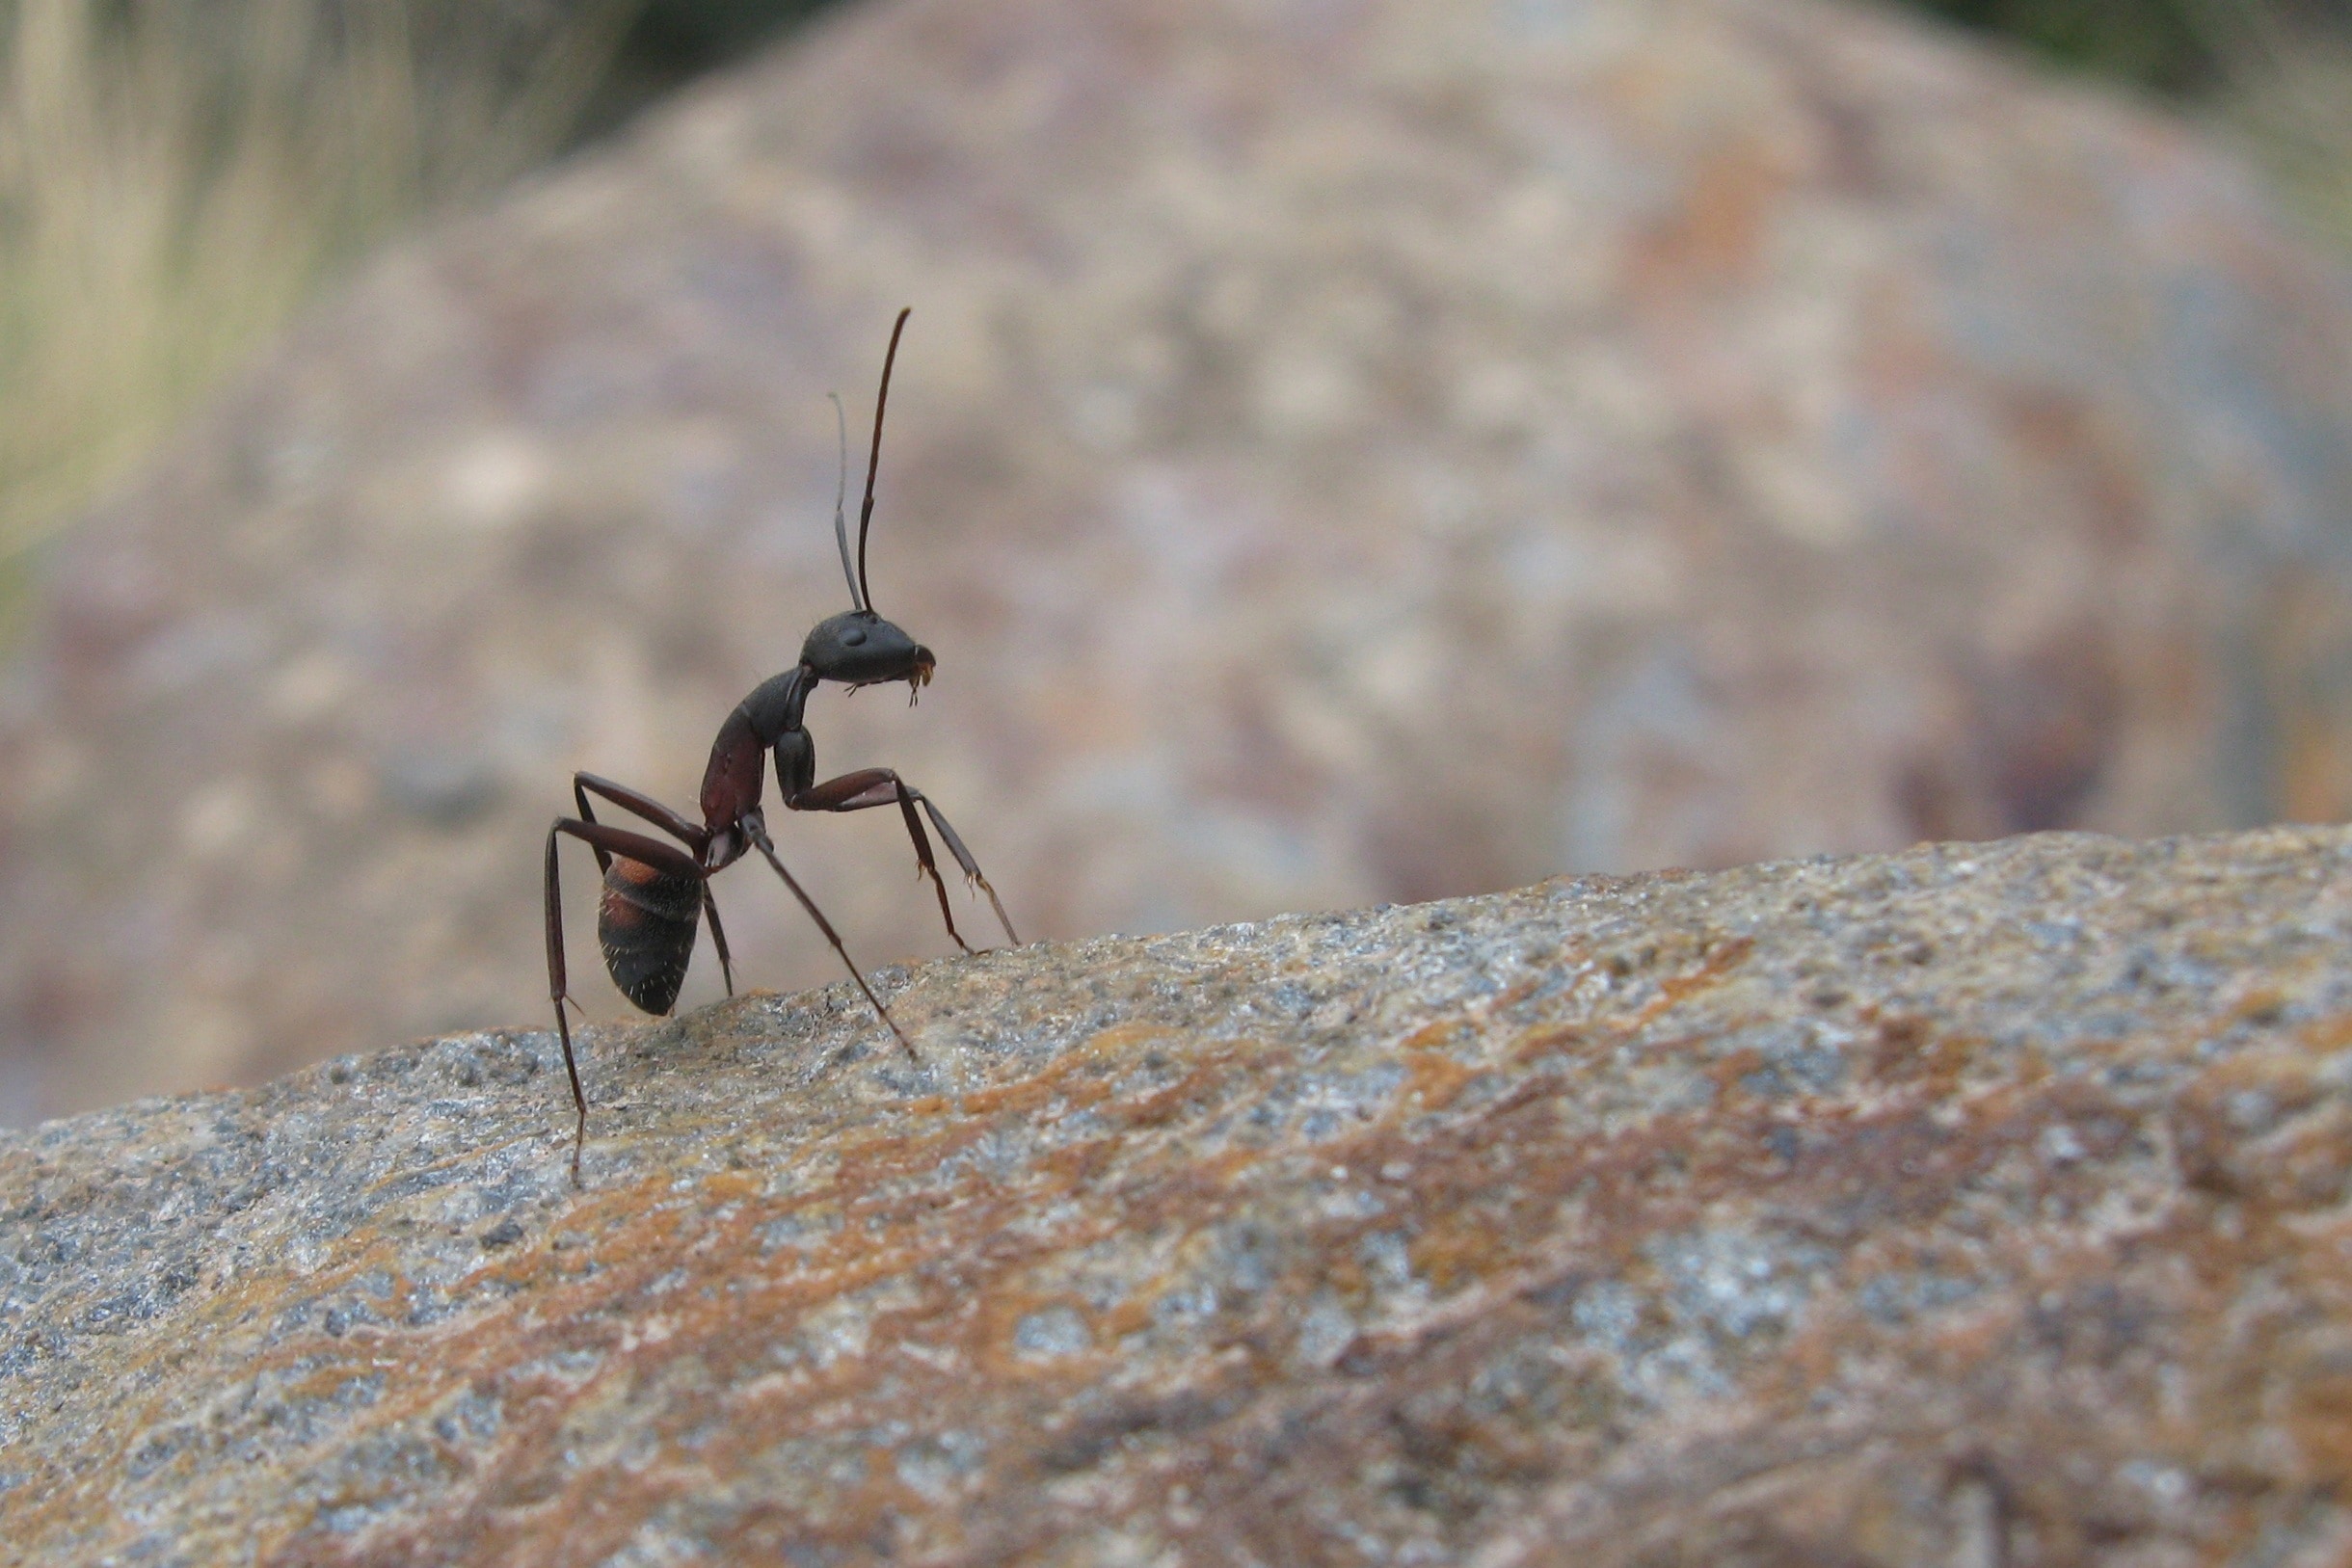 Картинки муравьев. Муравей. Маленькие муравьи. Усики муравья. Муравей с усиками.